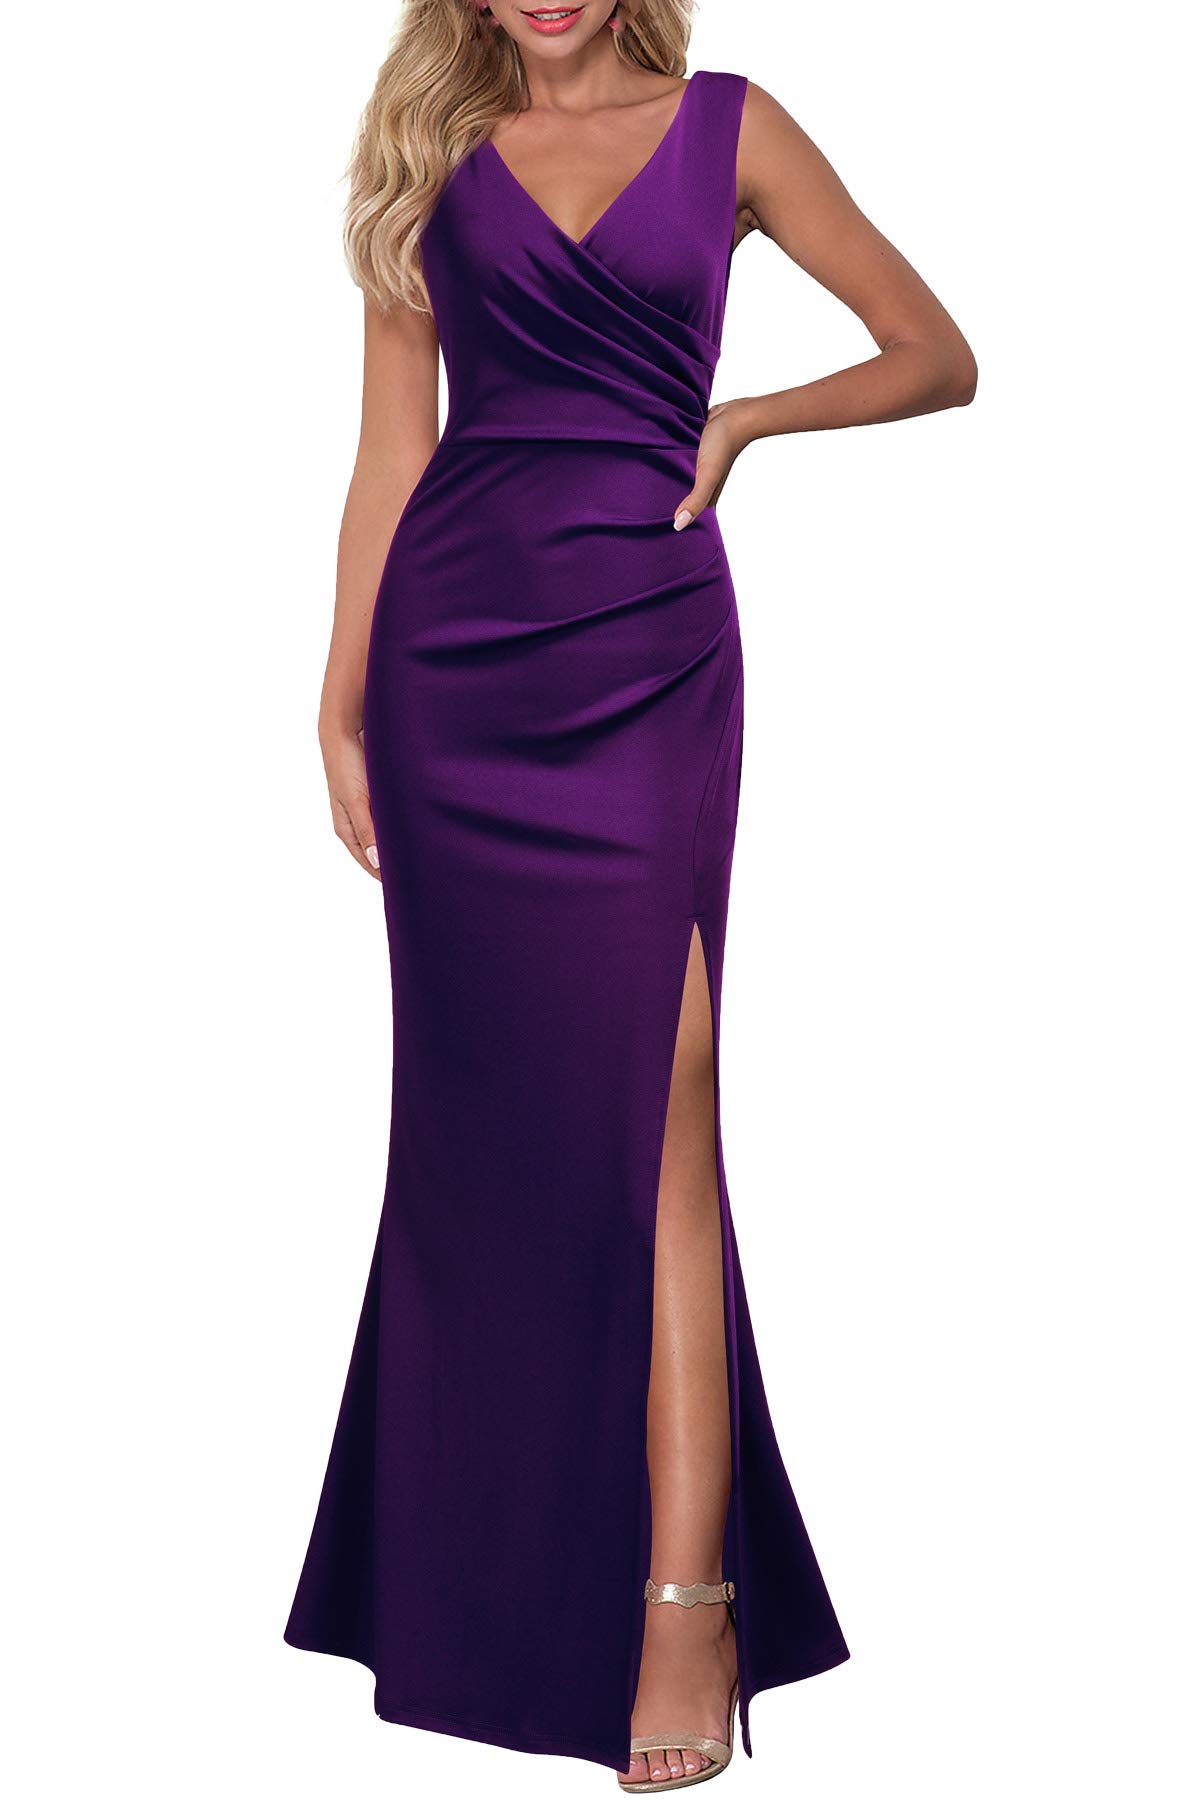 Purple Prom Dress 12